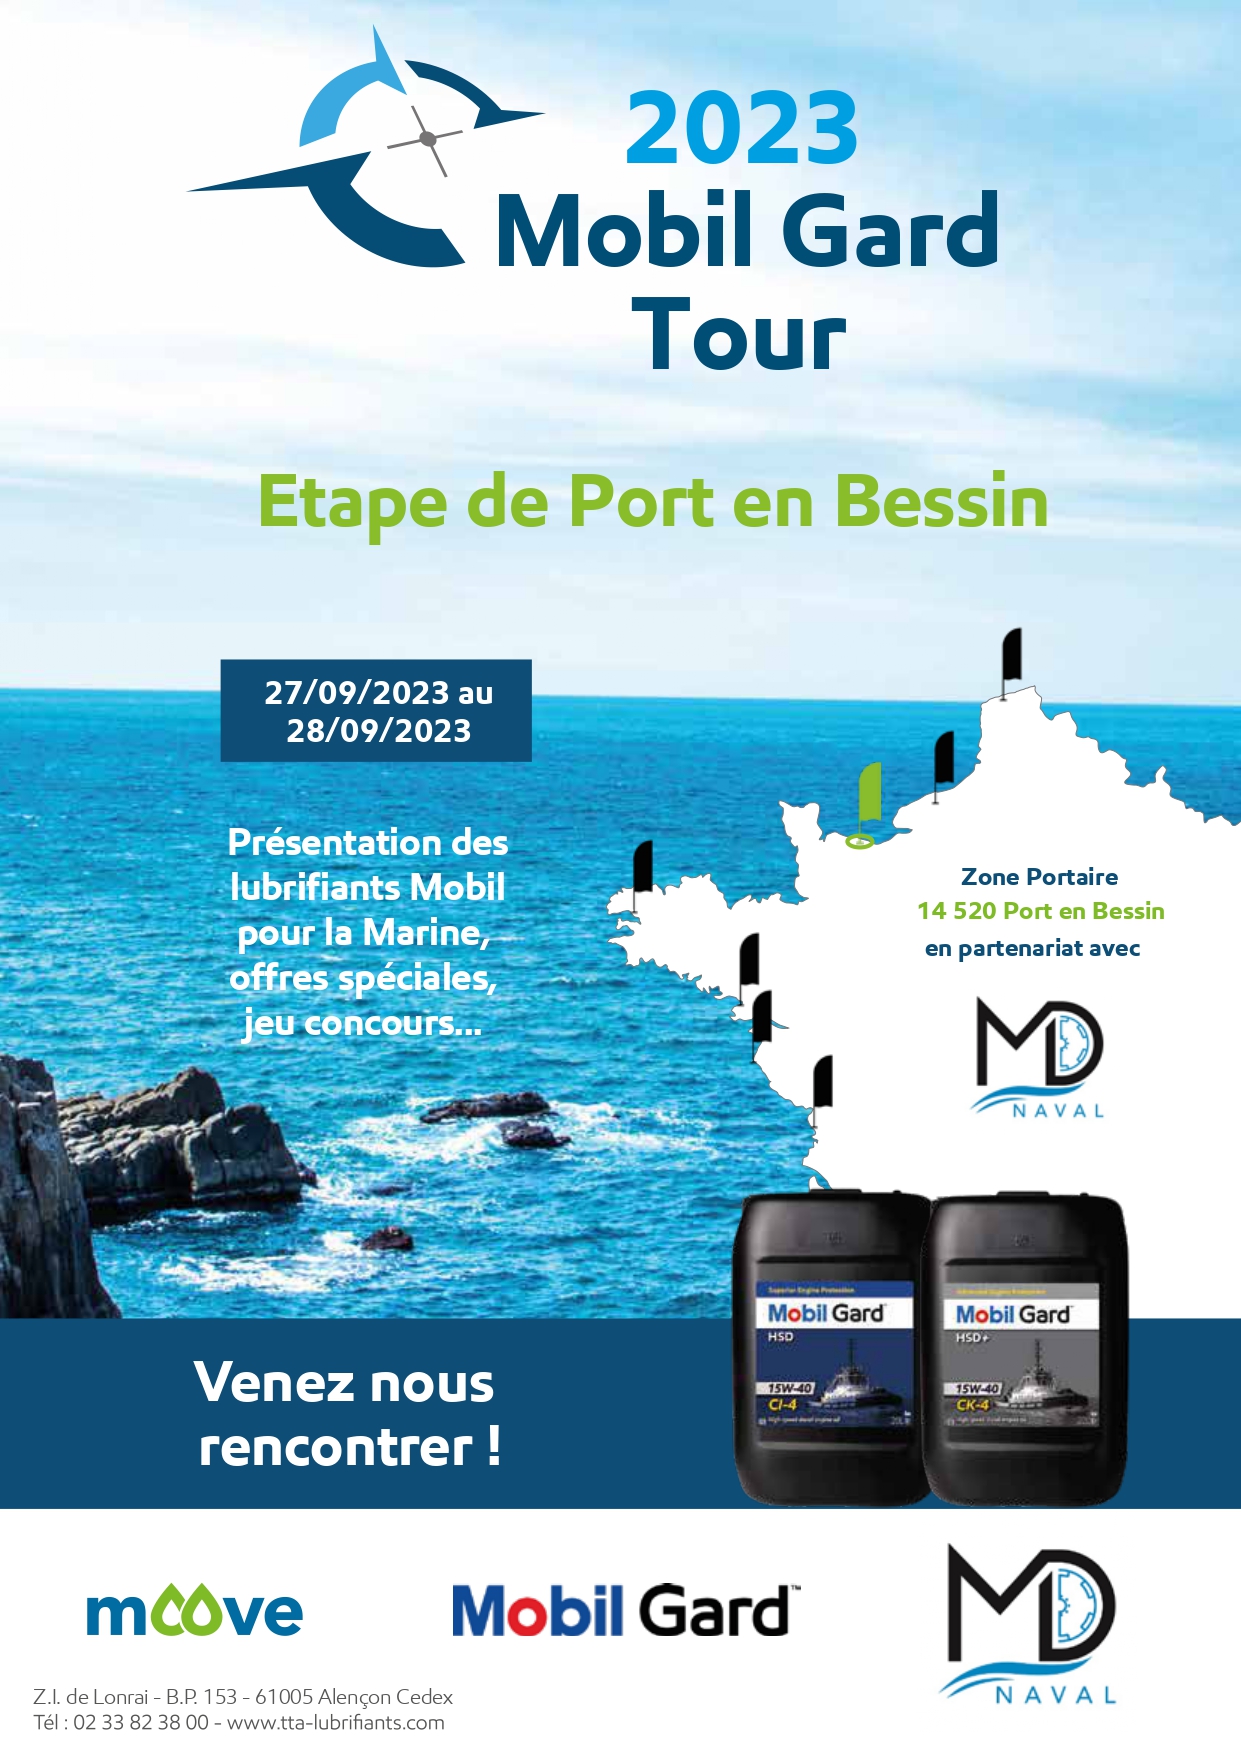 Mobil Gard Tour - Etape de Port en Bessin MD NAVAL